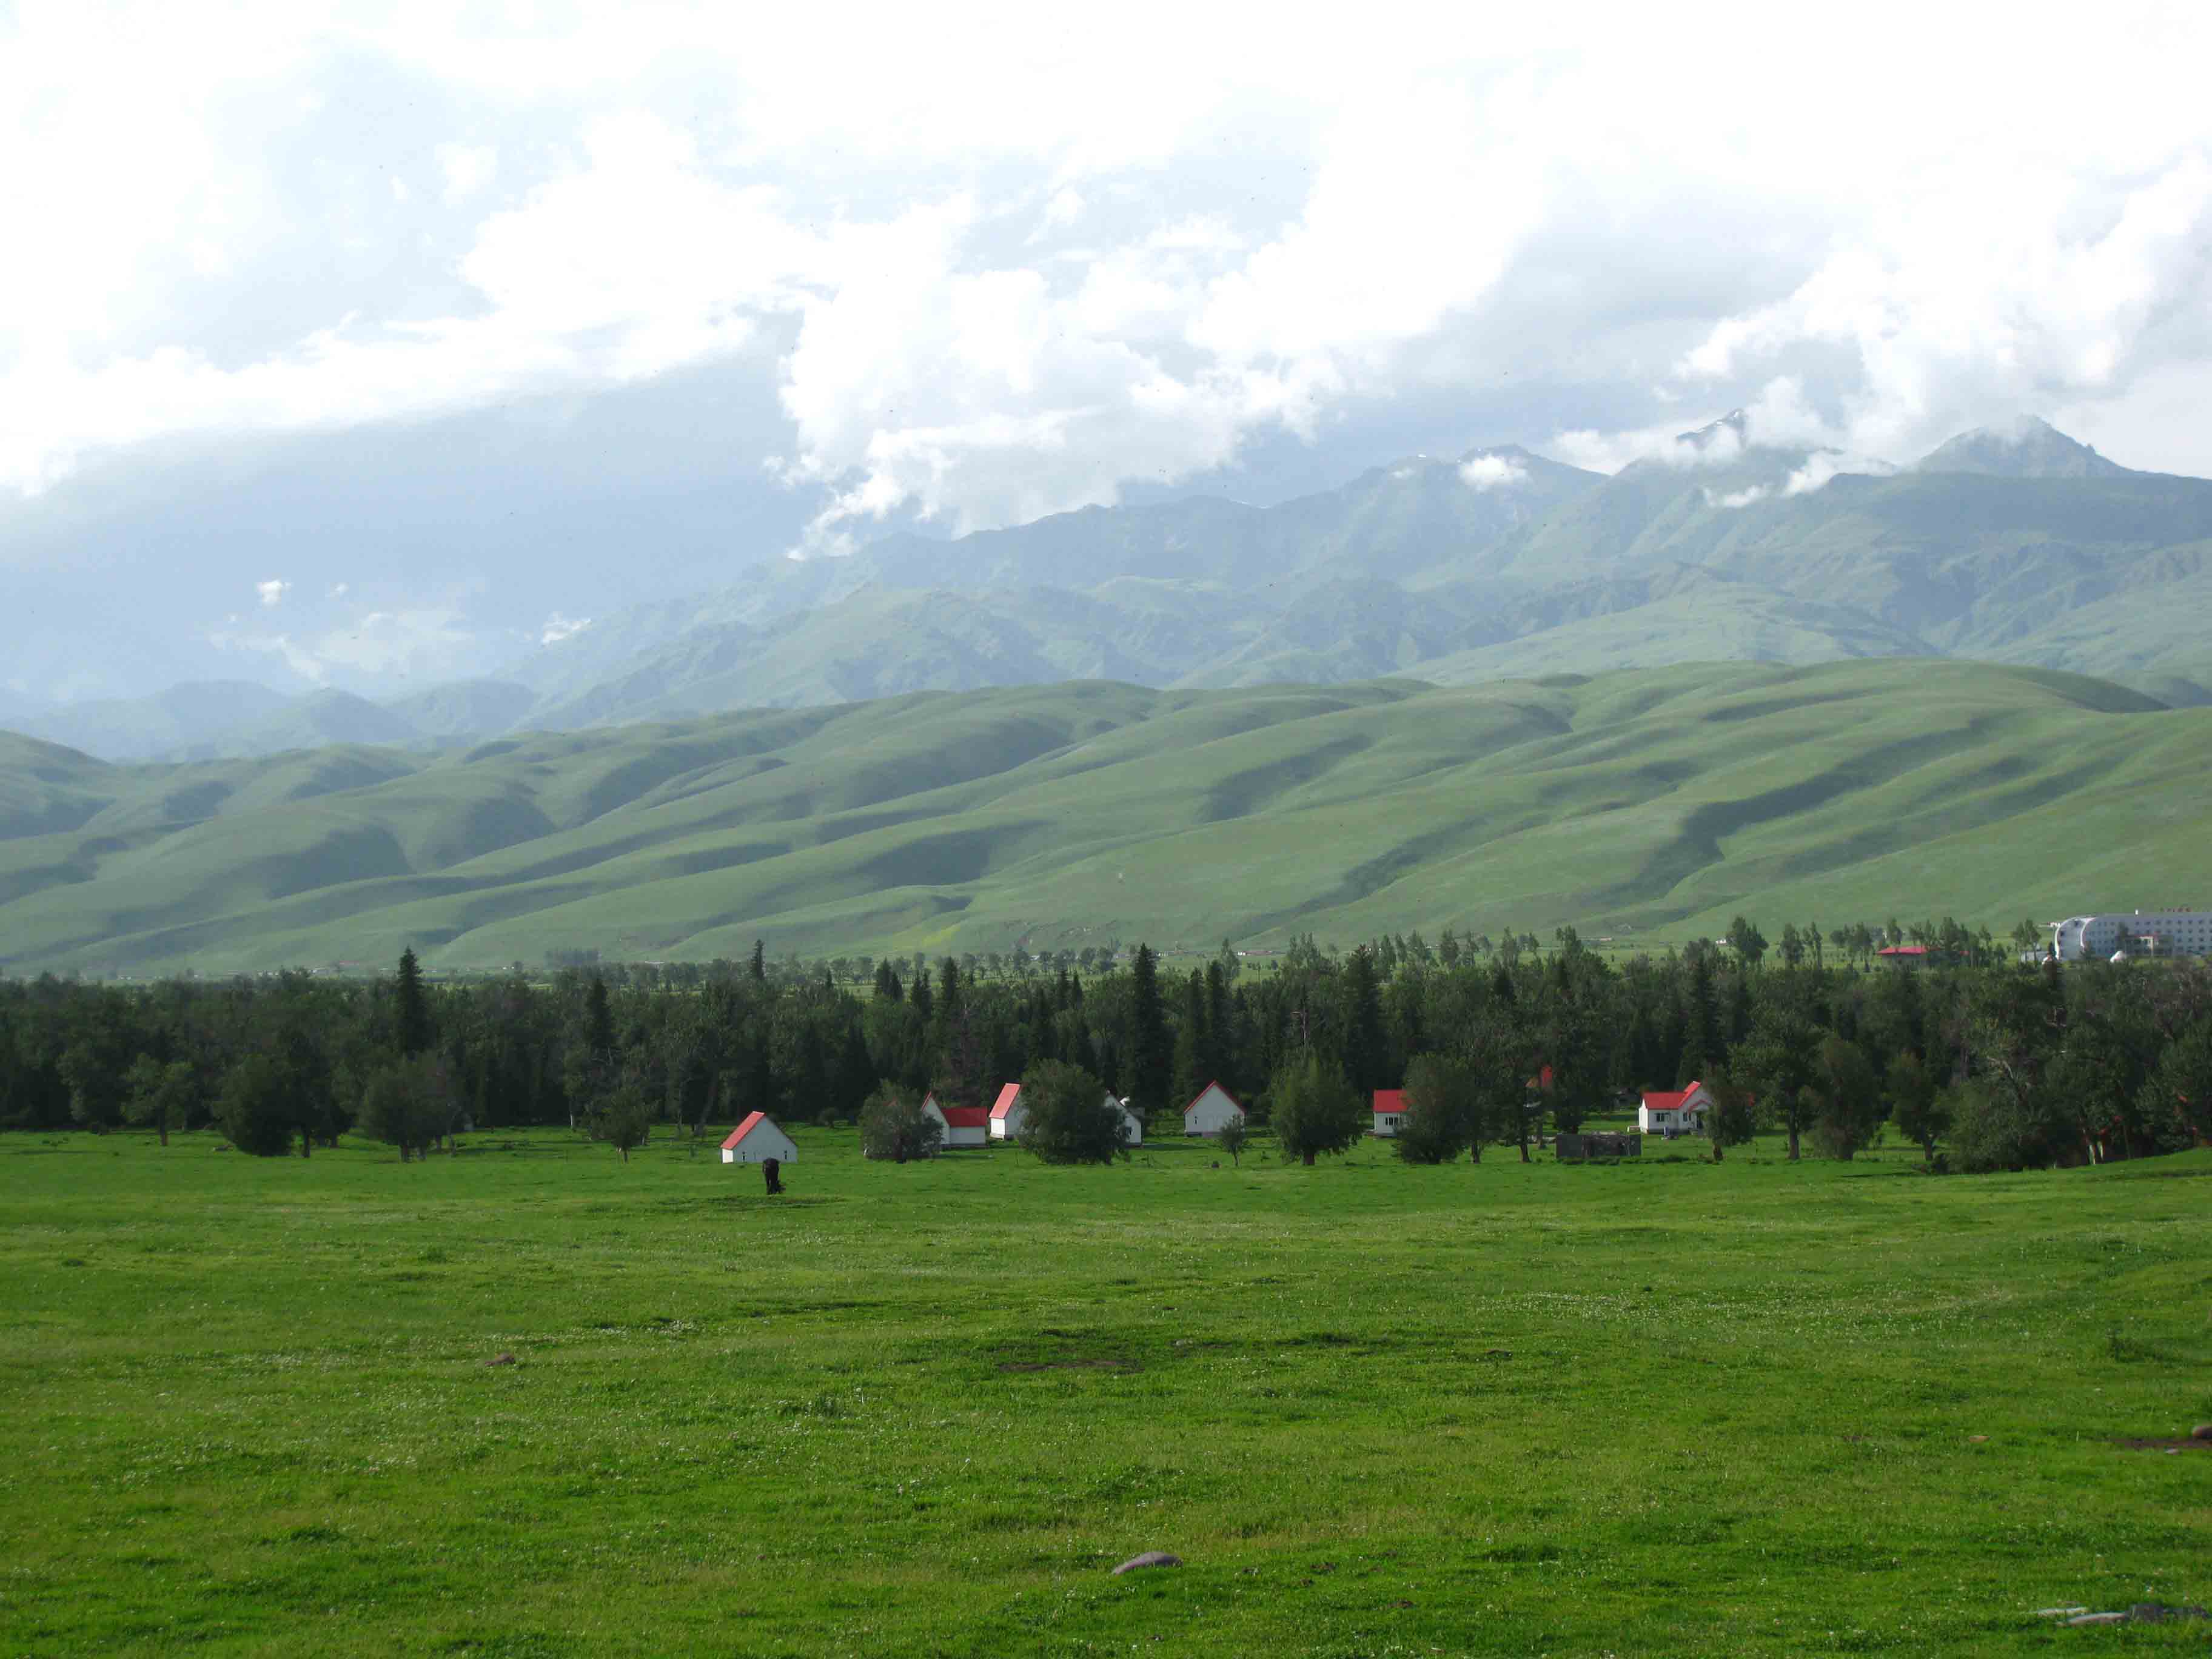 Scenery of the Narat Prairie in Xinyuan County